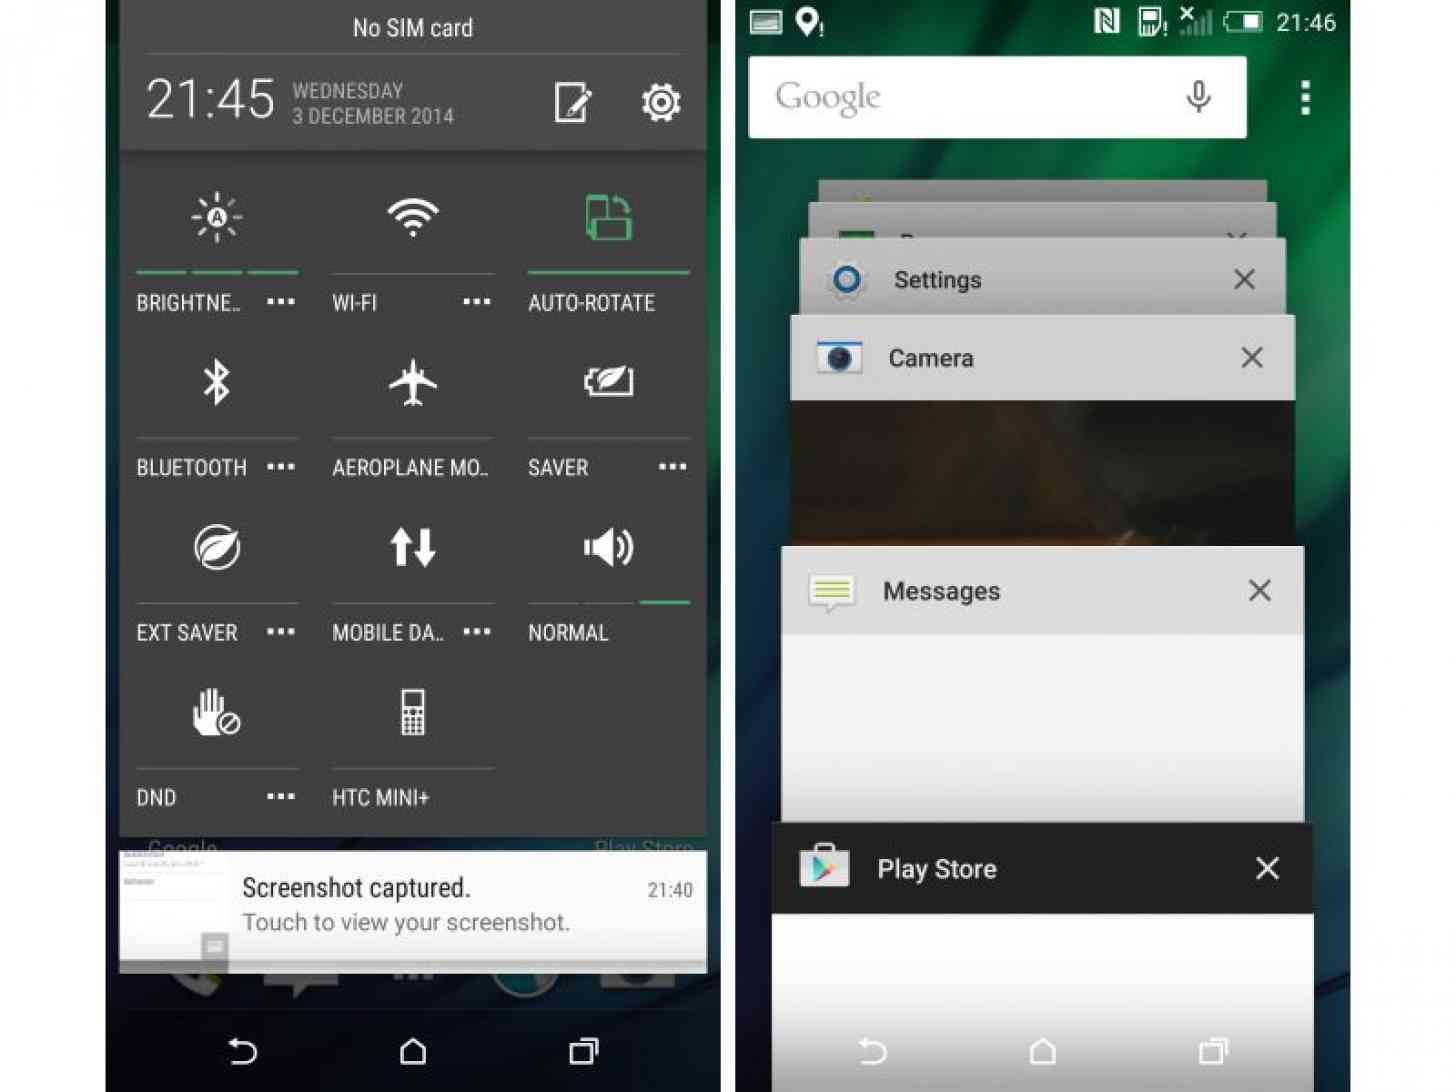 HTC One (M8) Android 5.0 Lollipop Sense 6 screenshots recent apps quick settings